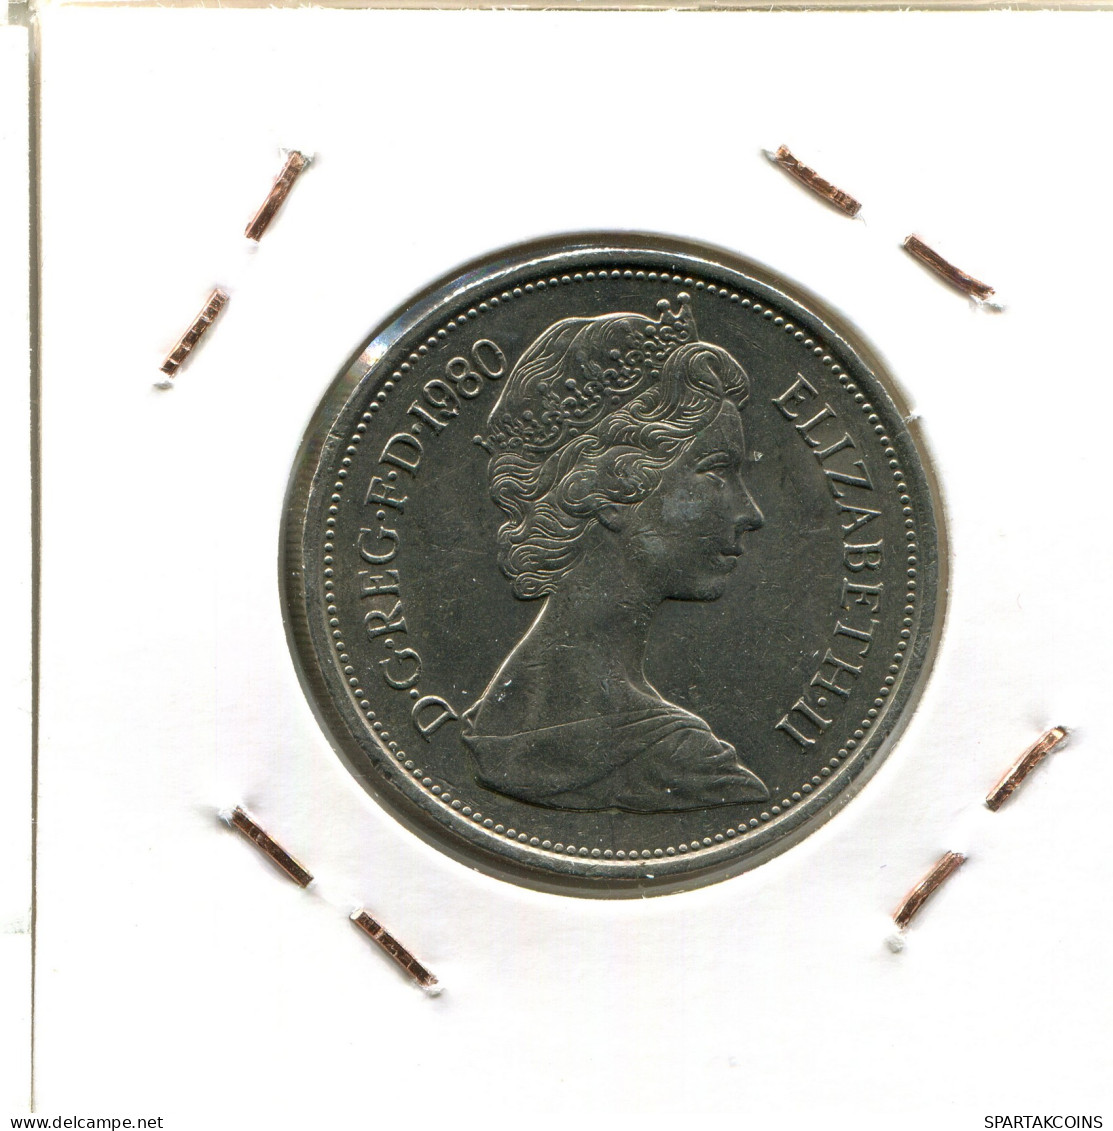 10 PENCE 1980 UK GROßBRITANNIEN GREAT BRITAIN Münze #AW215.D - 10 Pence & 10 New Pence